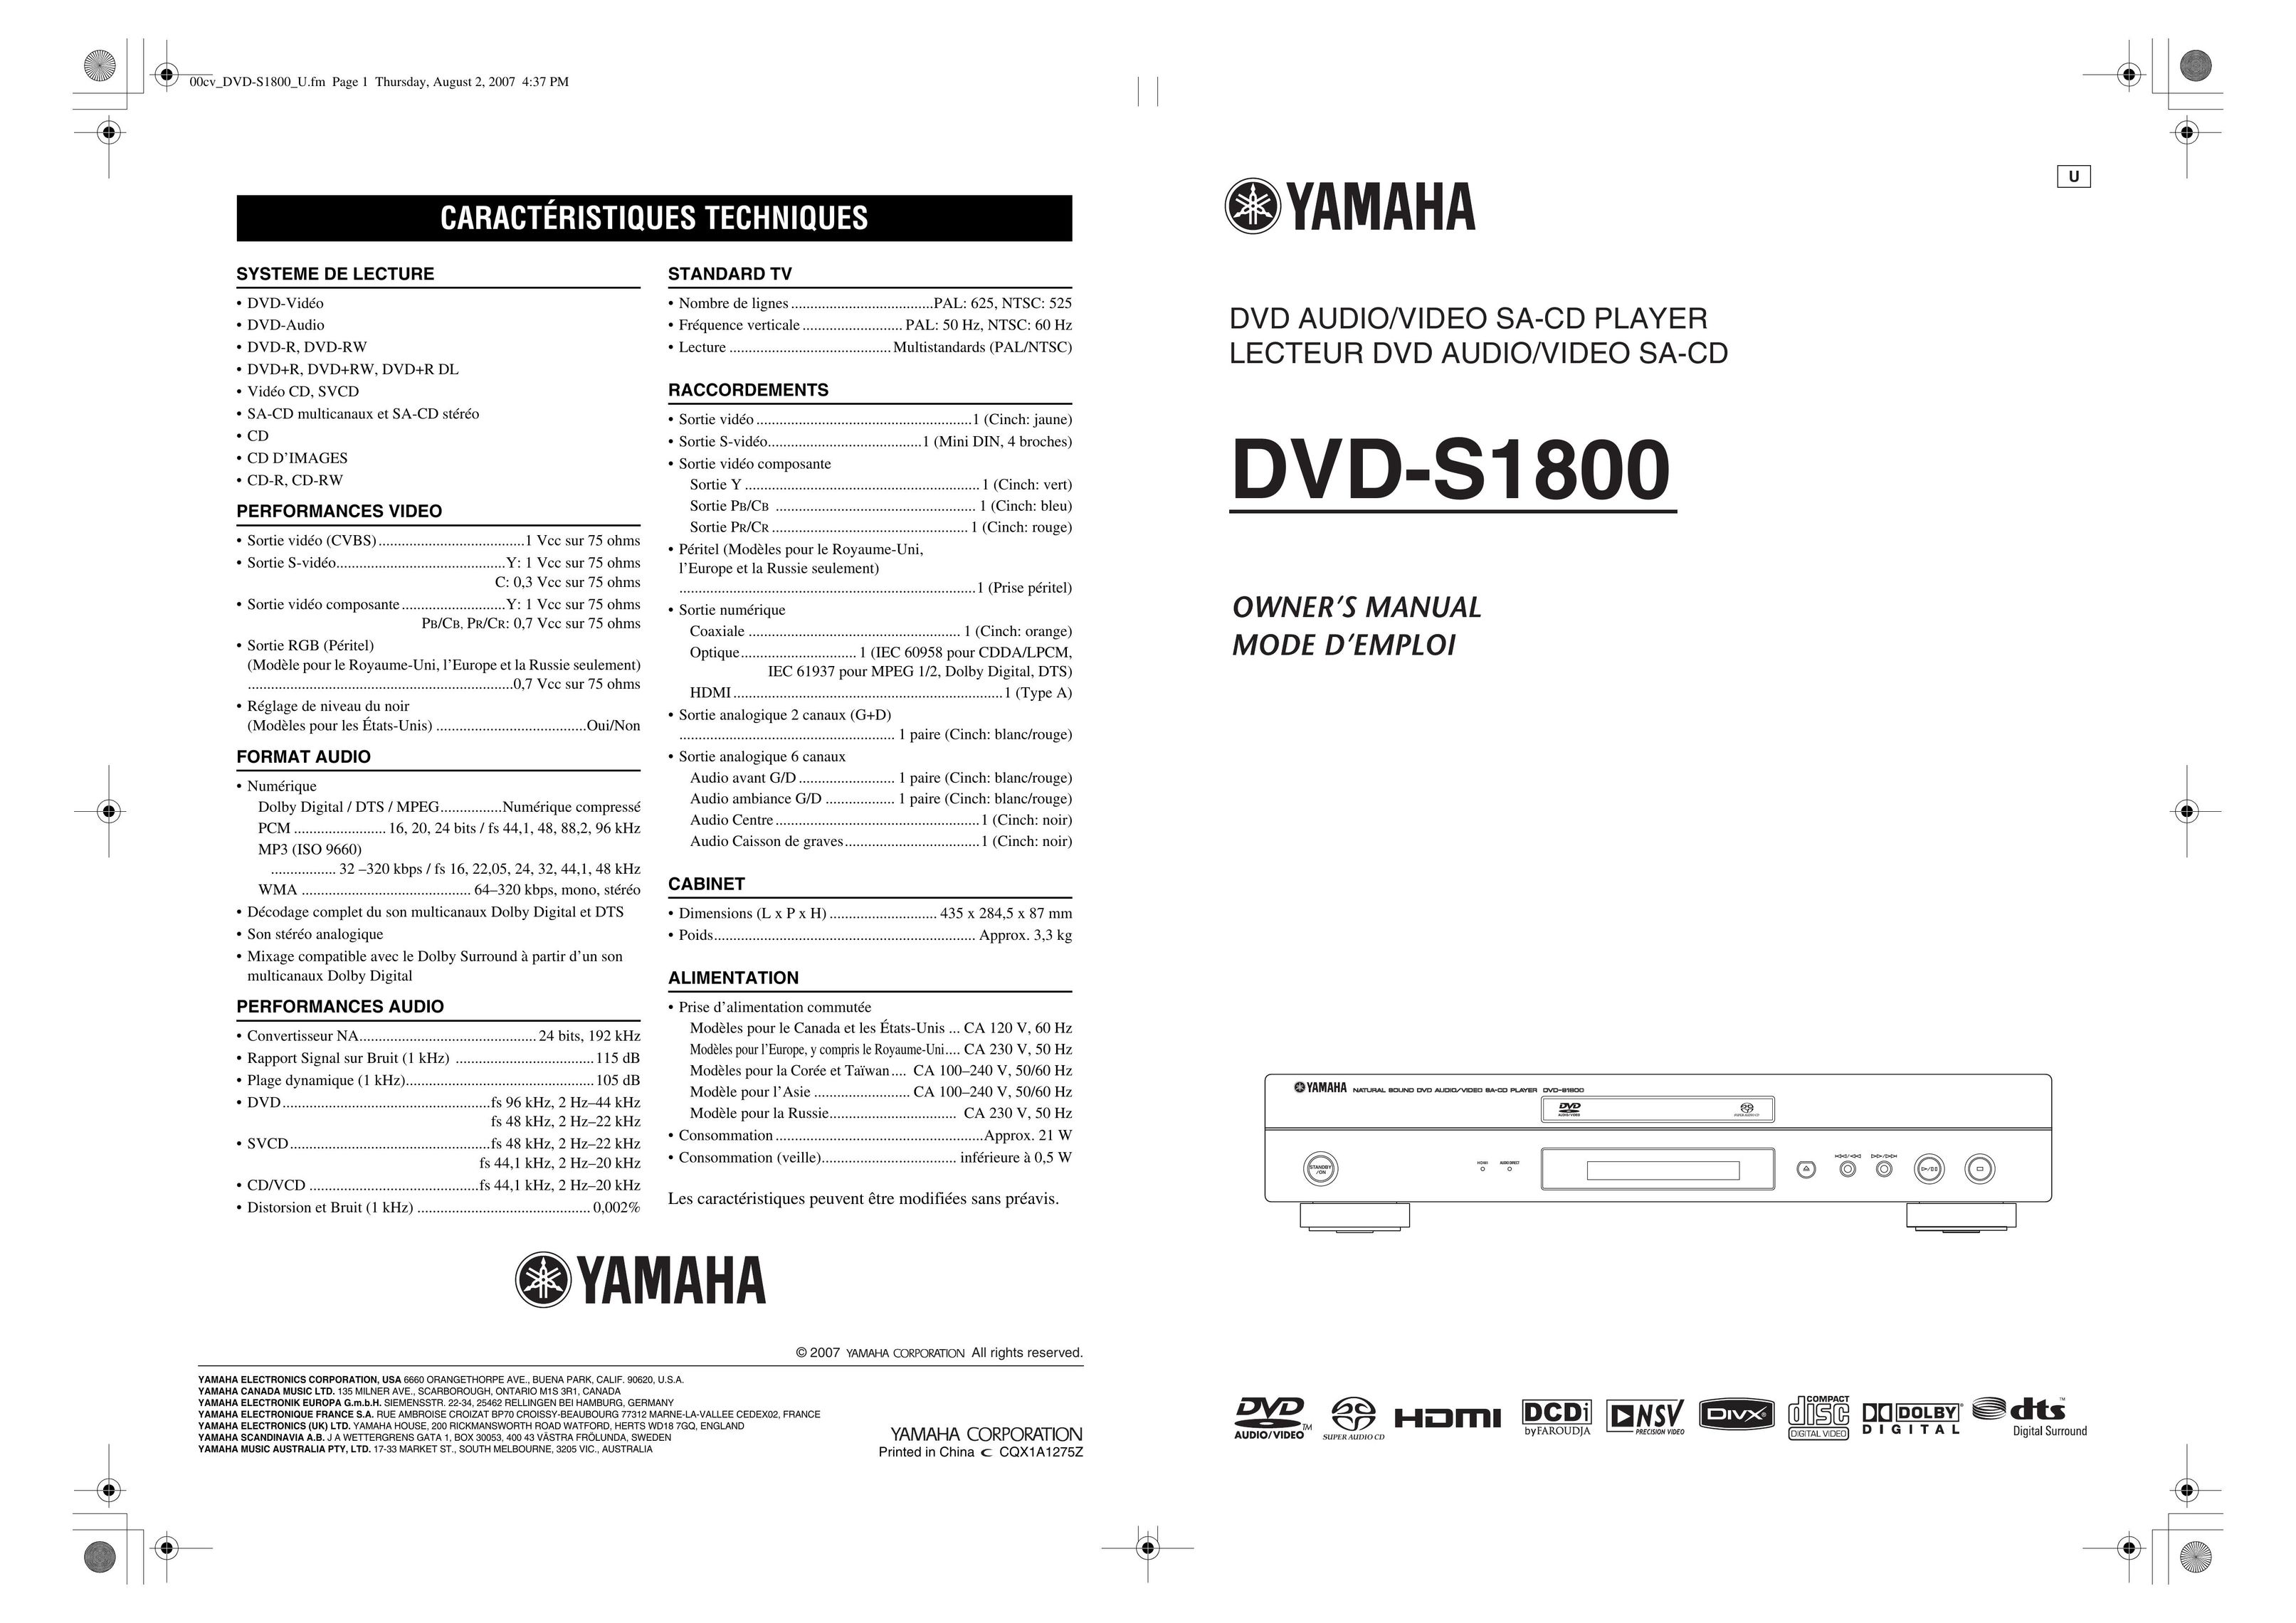 Yamaha DVD-S1800 Portable DVD Player User Manual